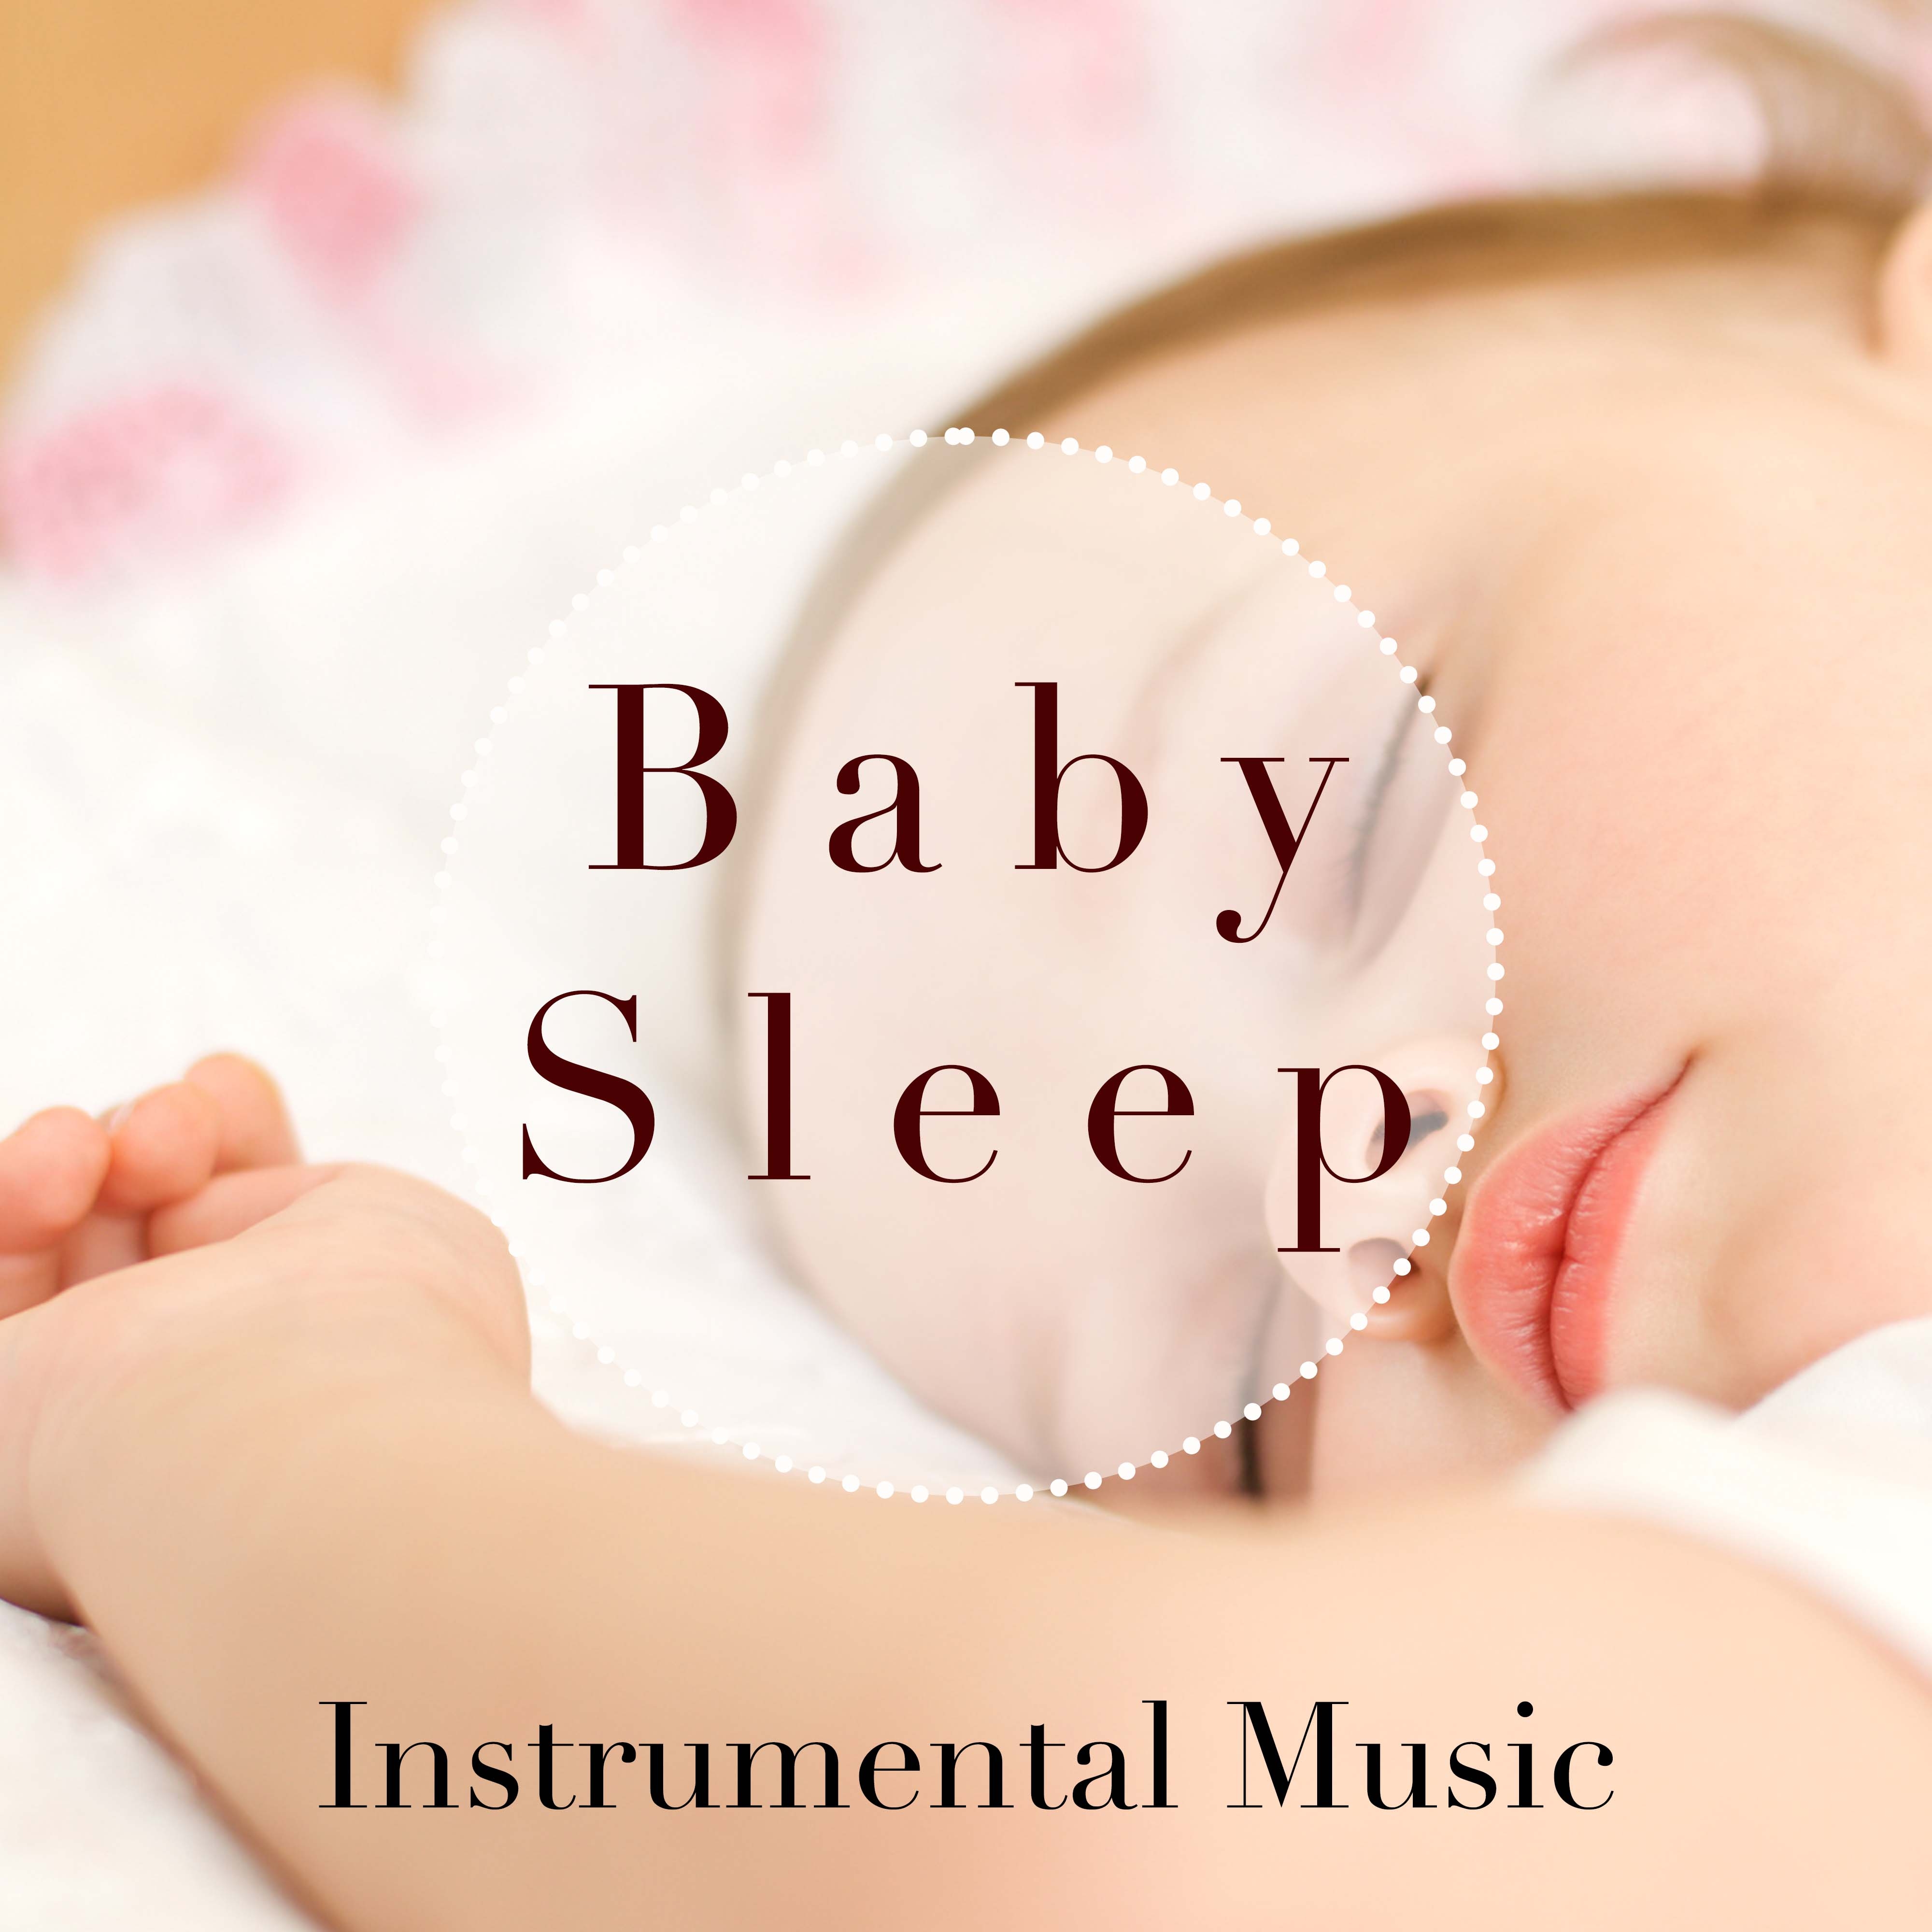 Baby Sleep - Instrumental Music